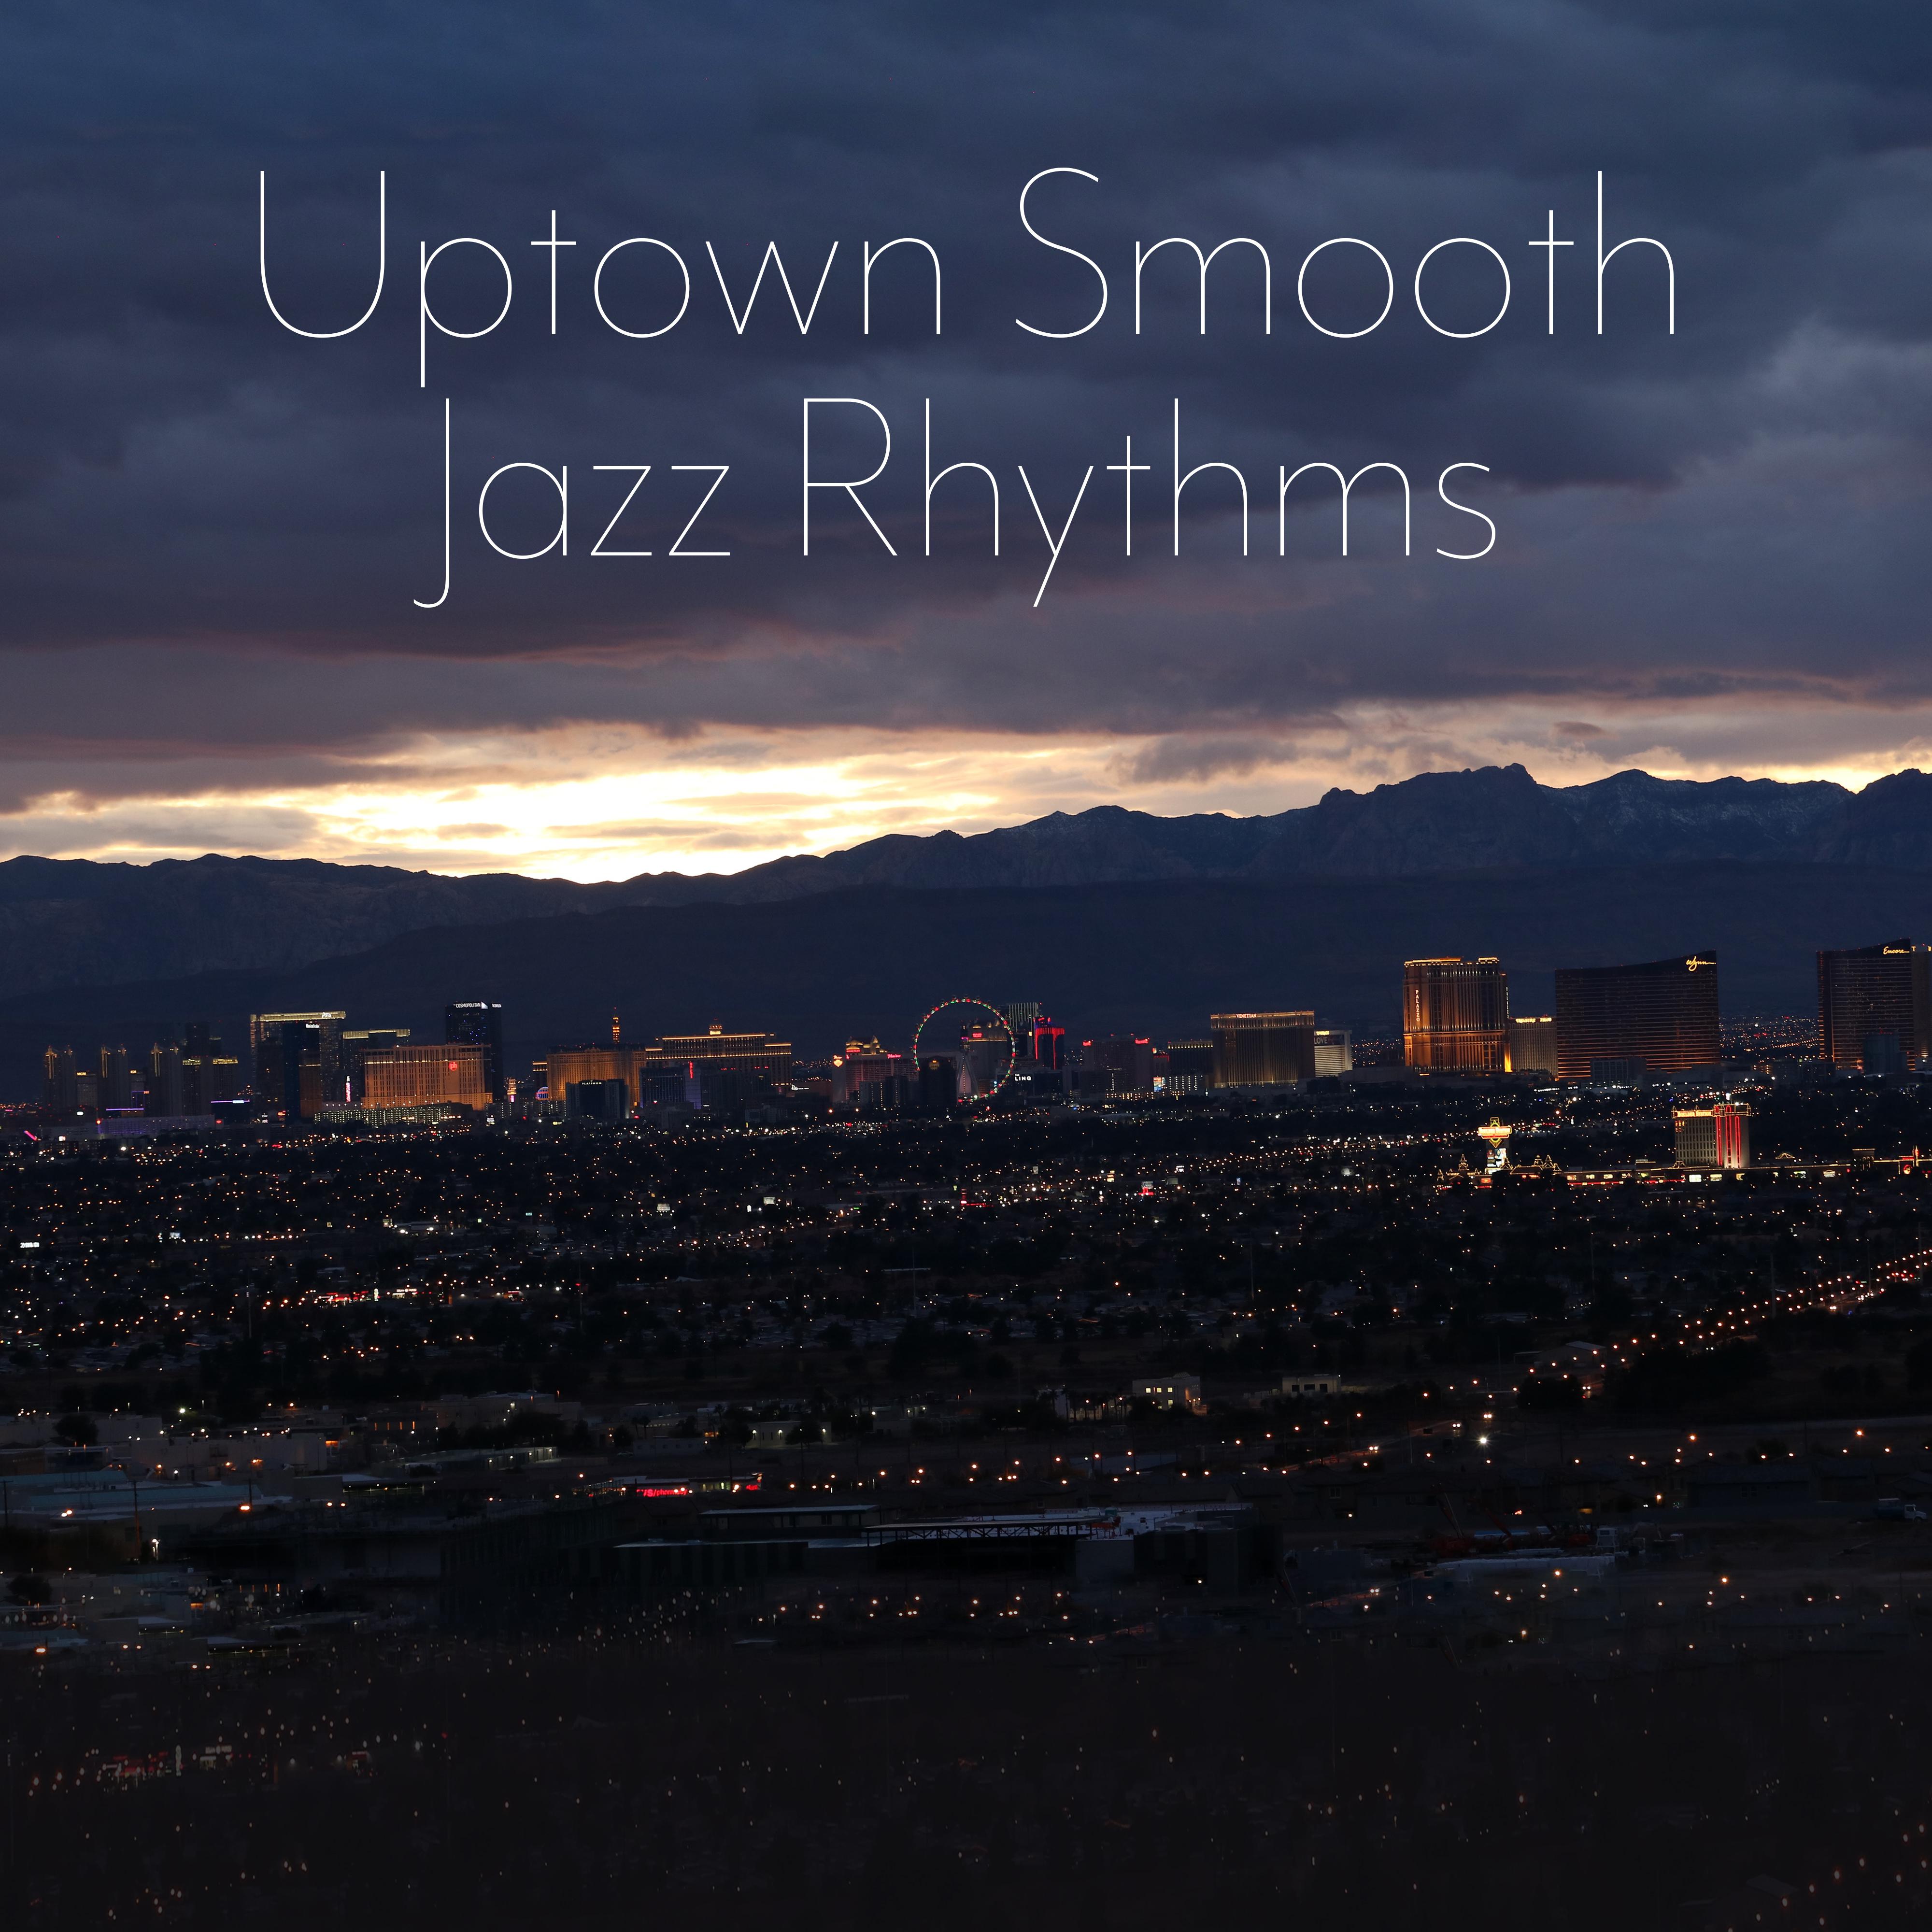 Uptown Smooth Jazz Rhythms